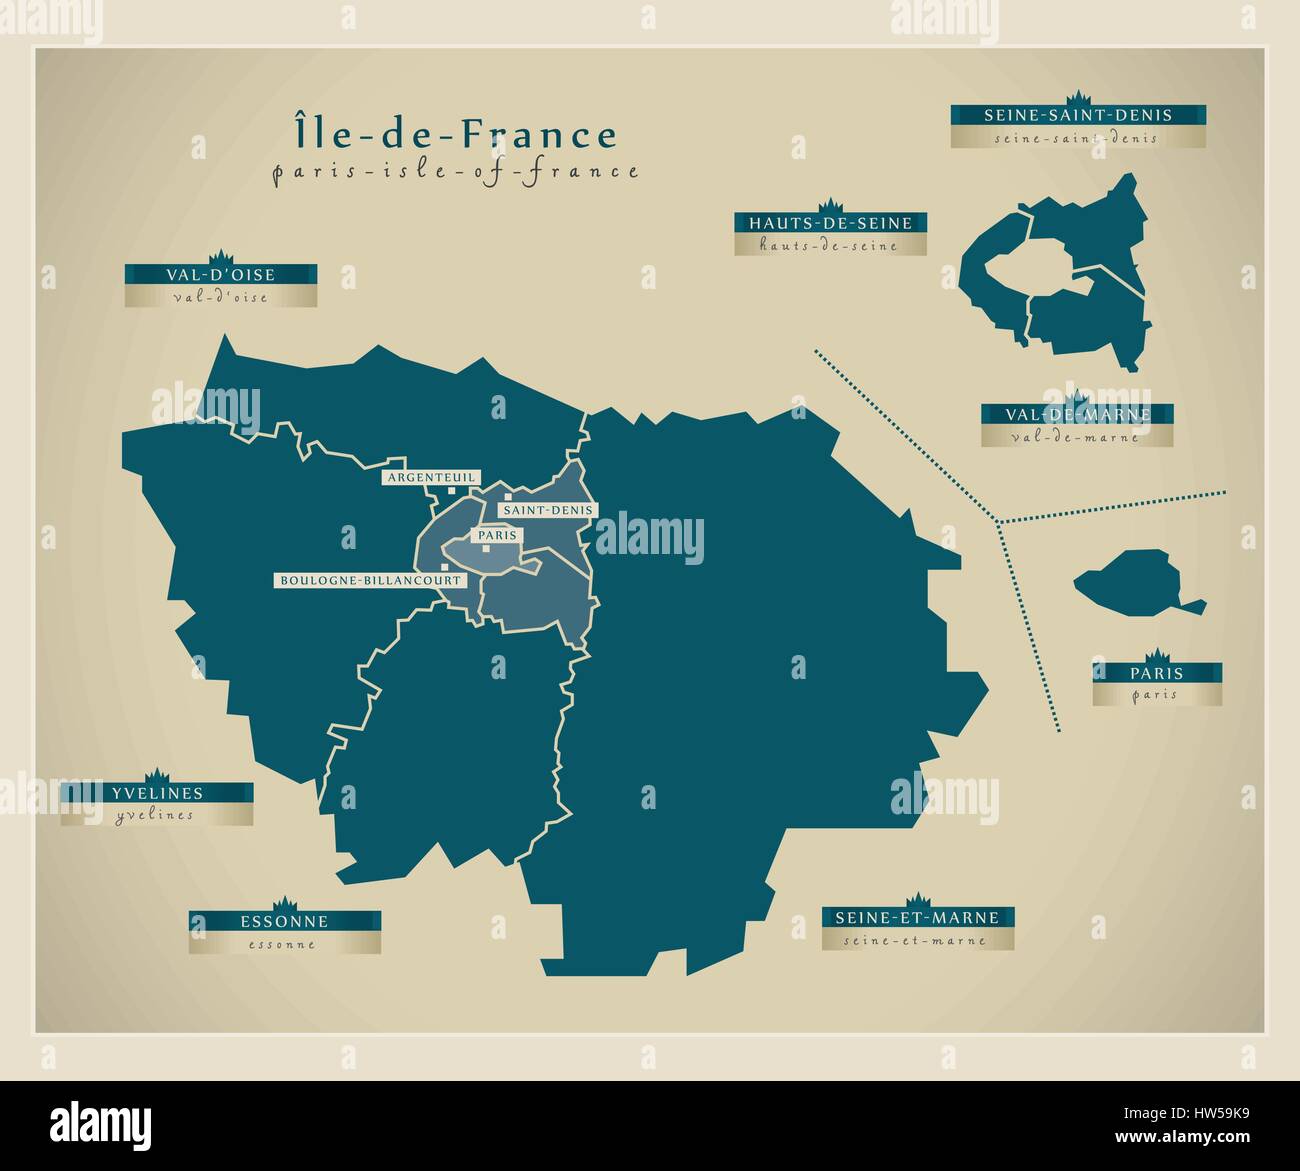 Saint-Germain-en-Laye, France, Map, & Facts